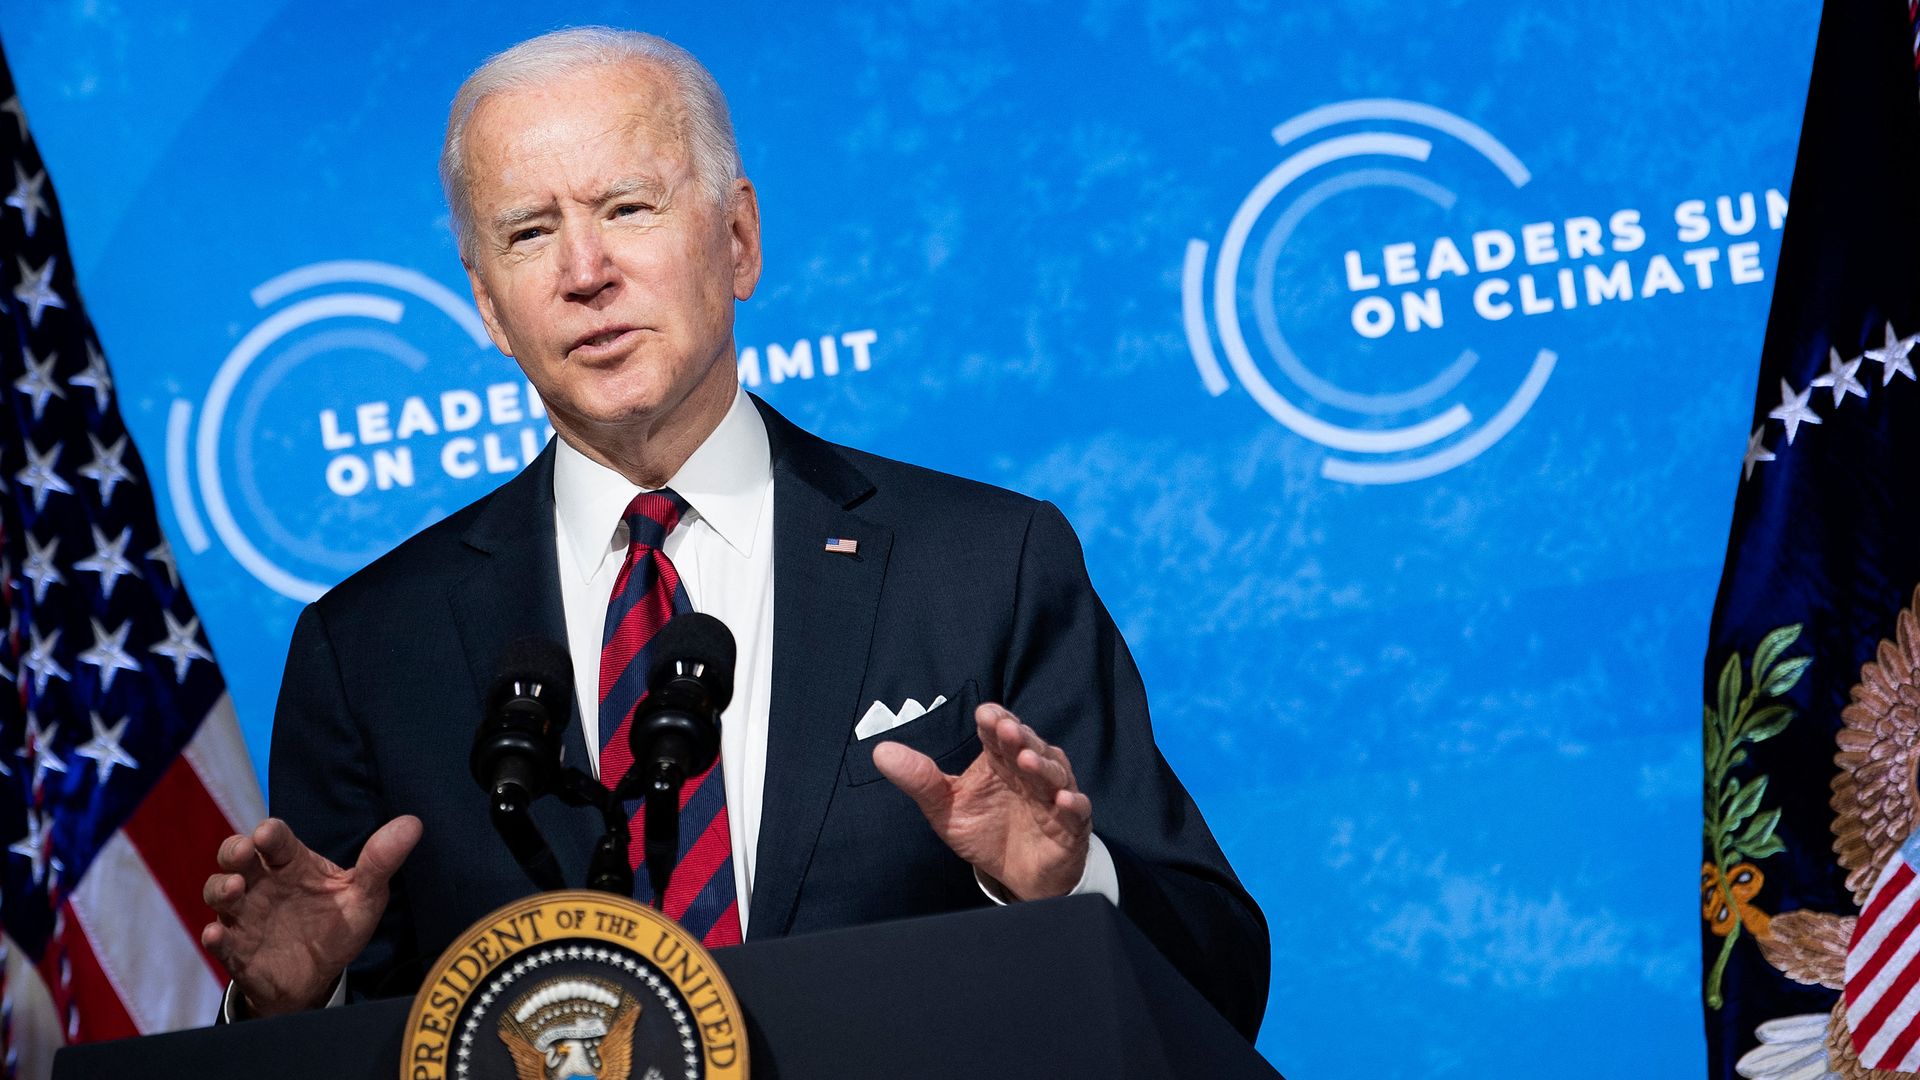 President Joe Biden speaks at a podium.